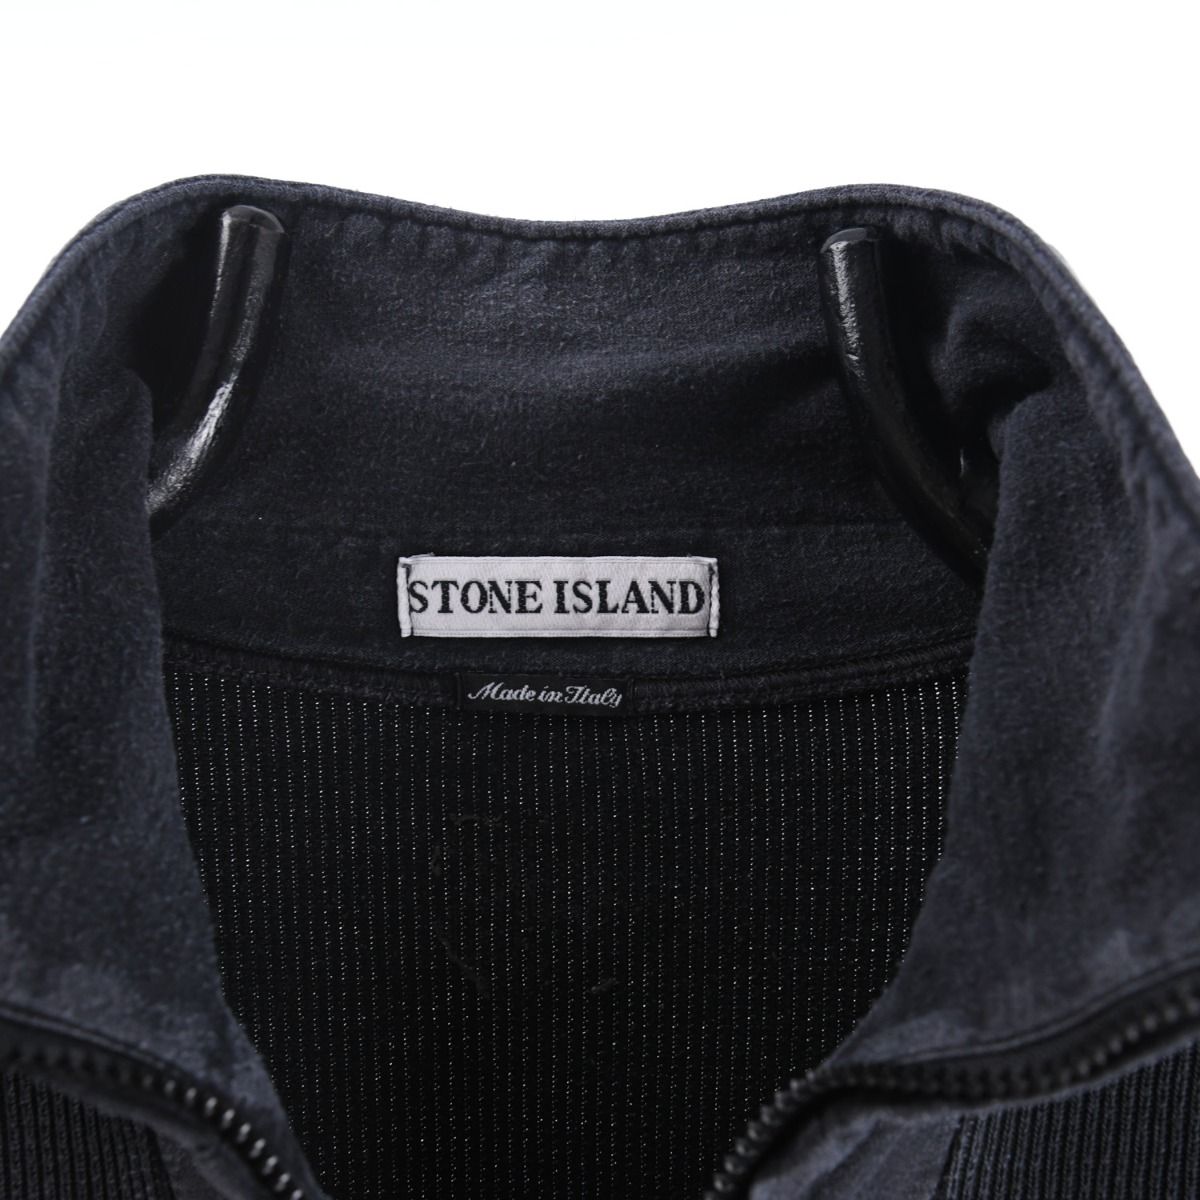 Stone Island S/S 2000 Ribbed Quarter-Zip Sweatshirt